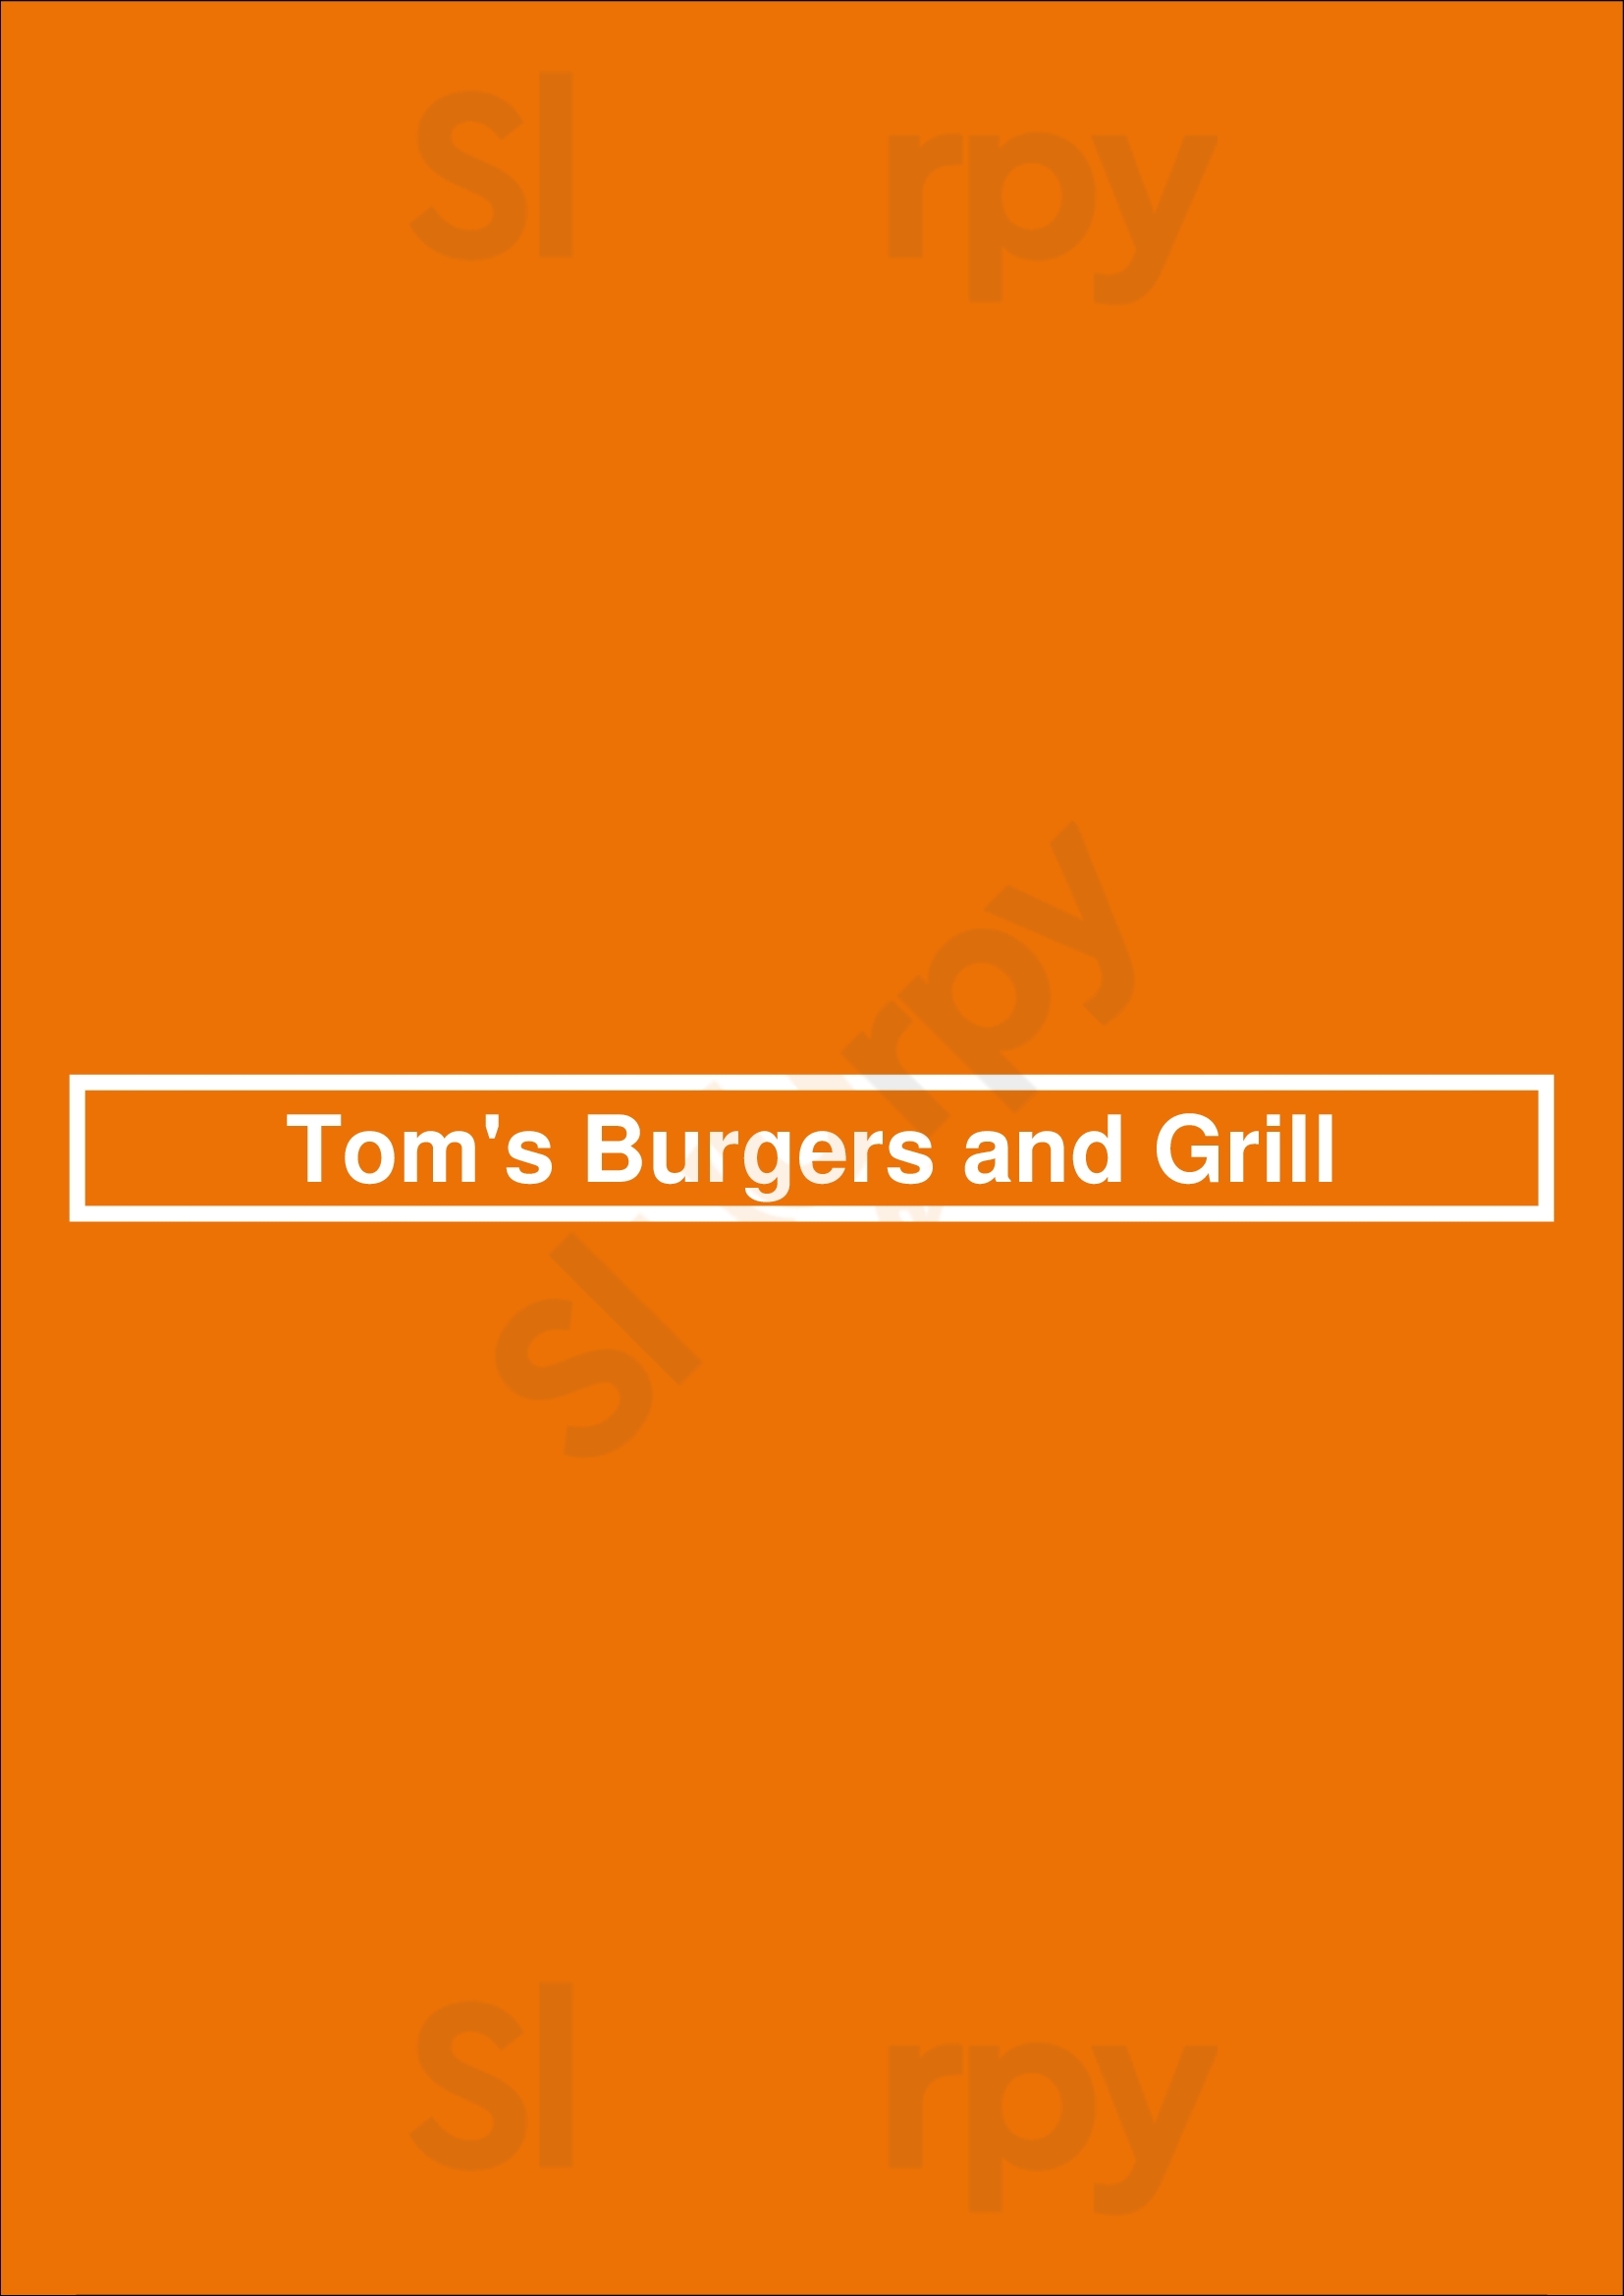 Tom's Burgers And Grill Arlington Menu - 1